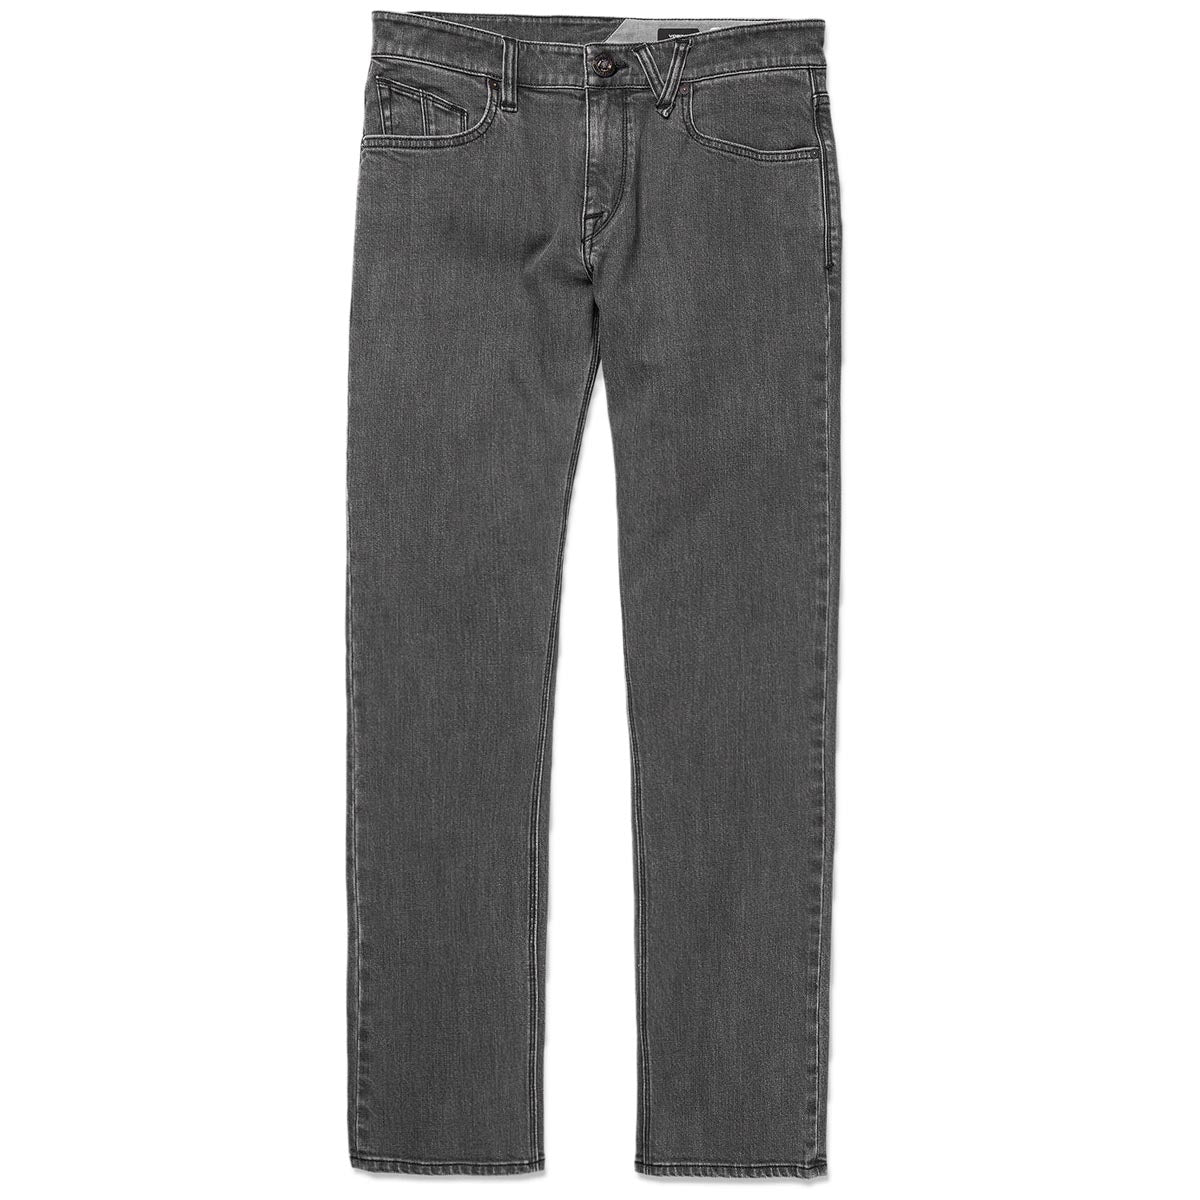 Volcom Vorta Denim Jeans - Easy Enzyme Grey image 1